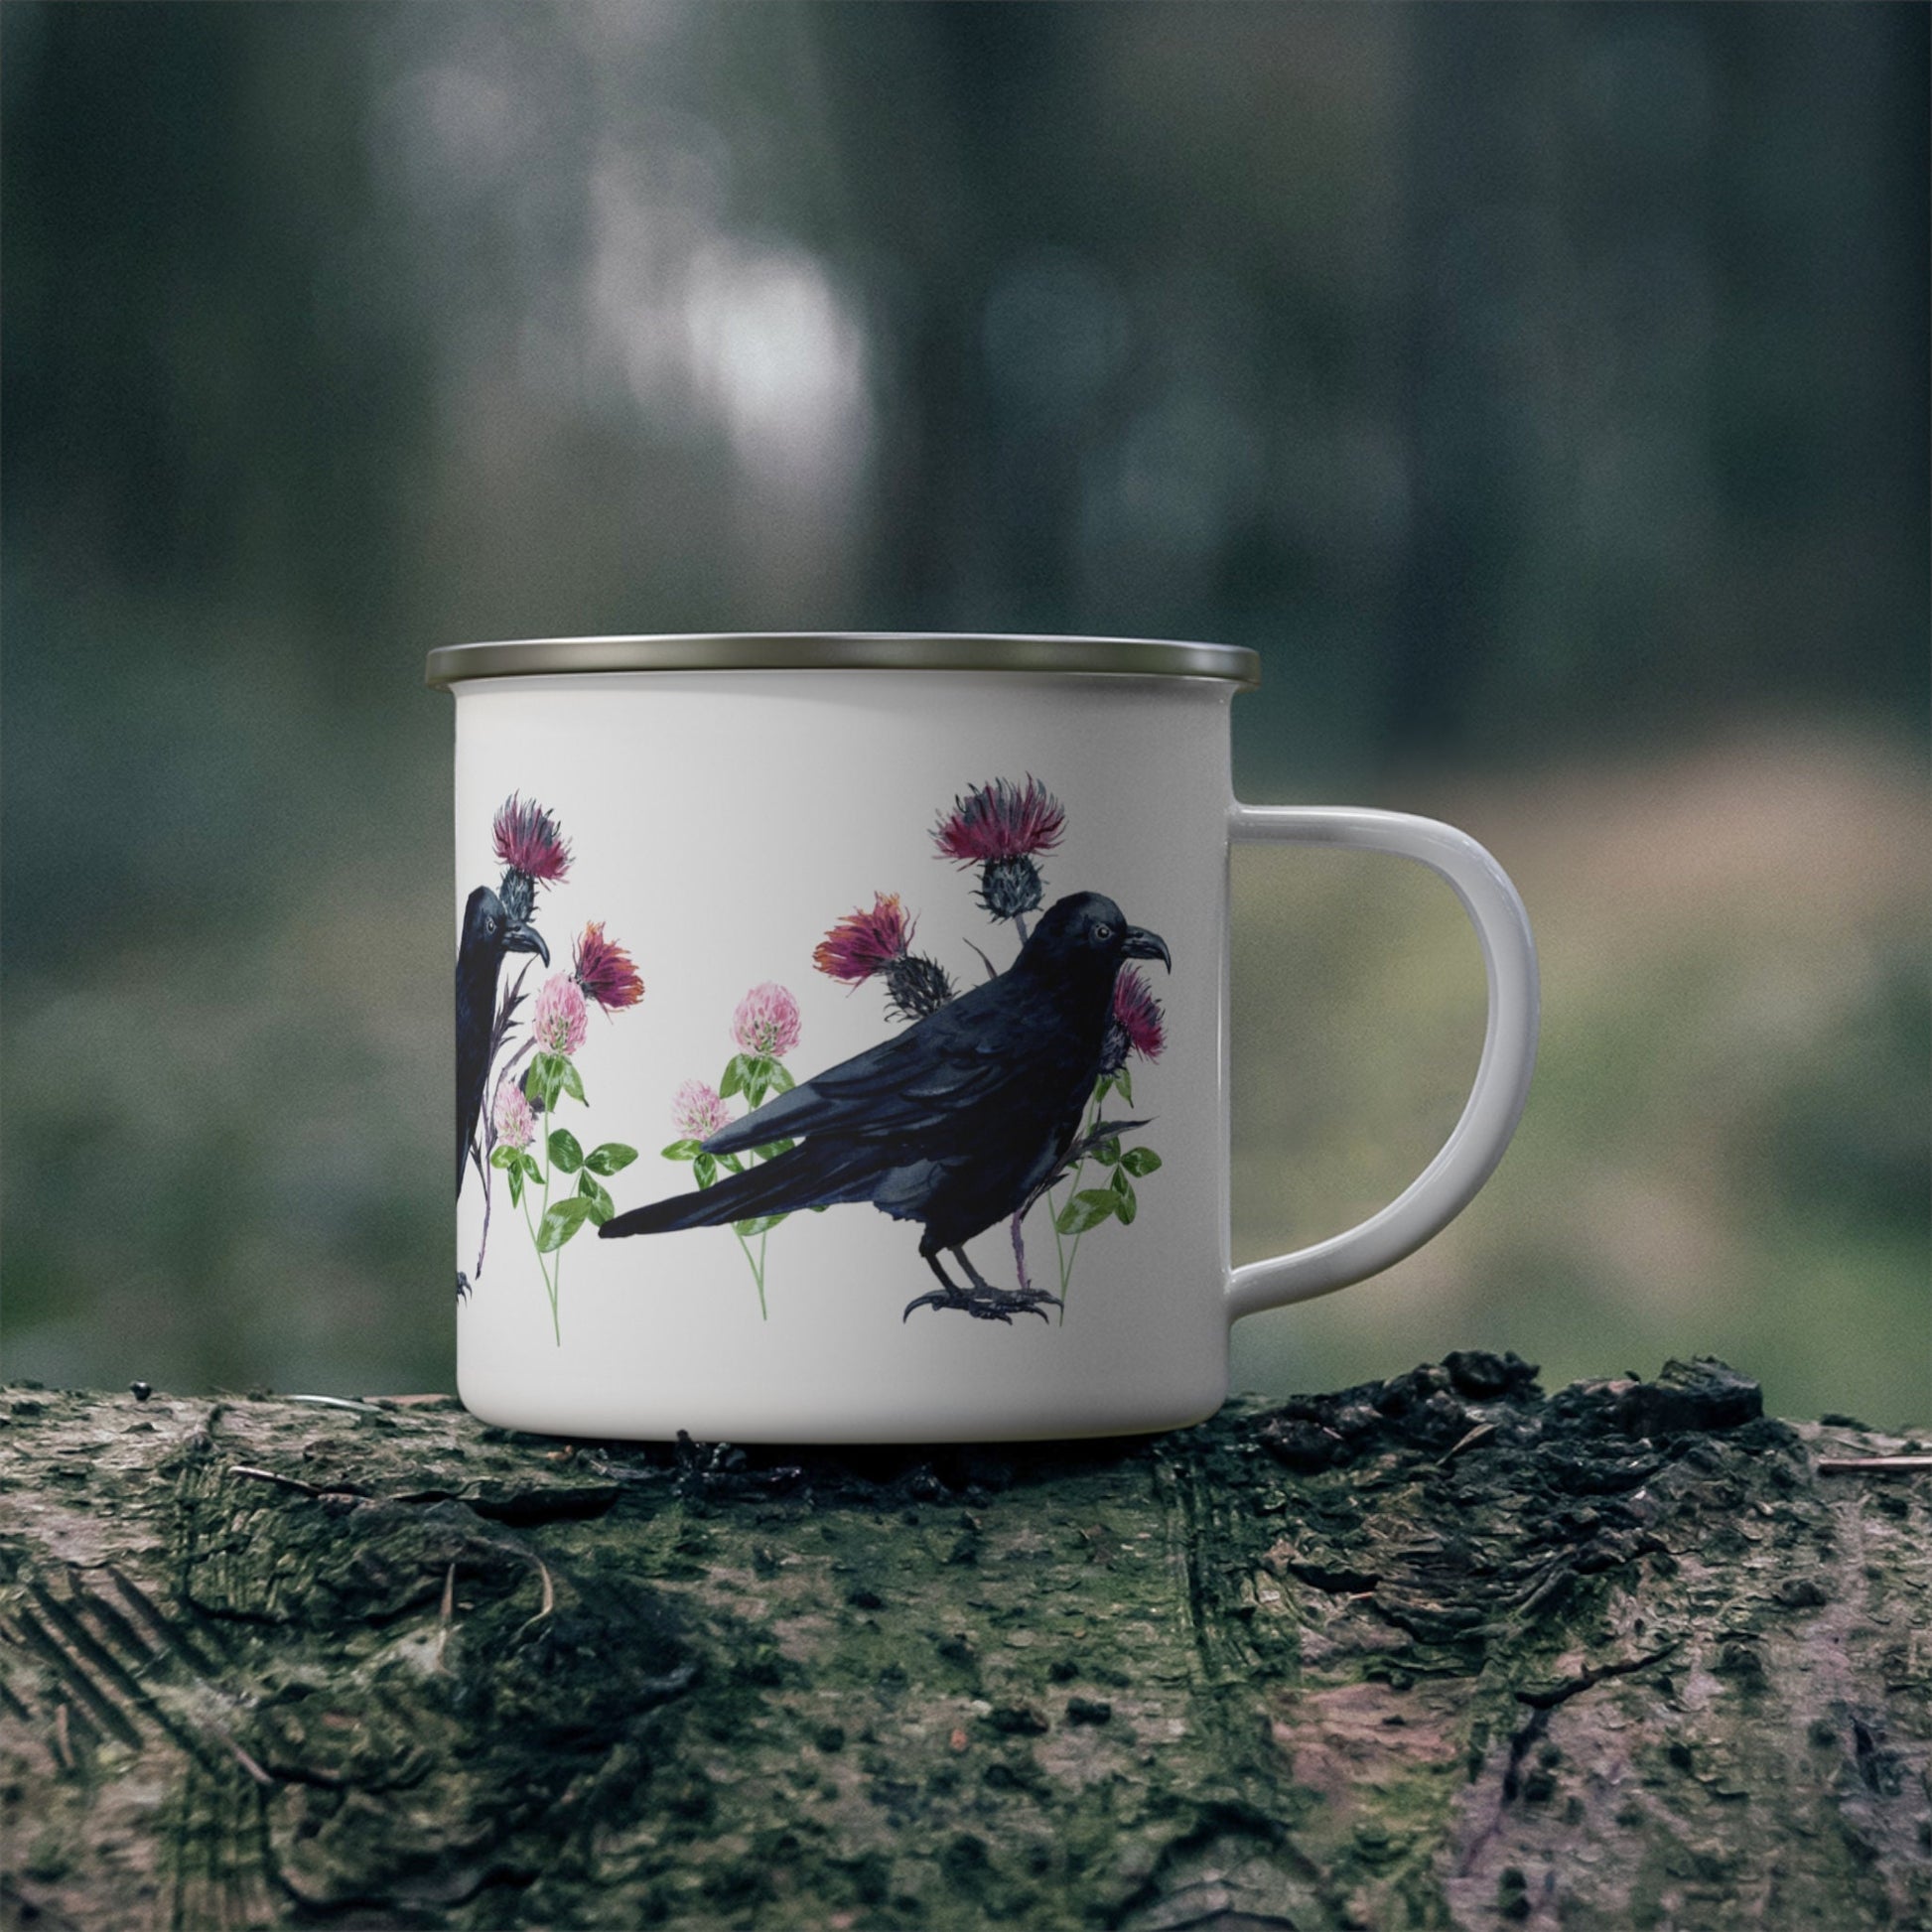 Raven Mug Thistles and Clover Wildflowers Black Bird Crowcore Fall Enamel Camping Mug Dark Academia Mug Goblincore Forestcore Halloween Mug